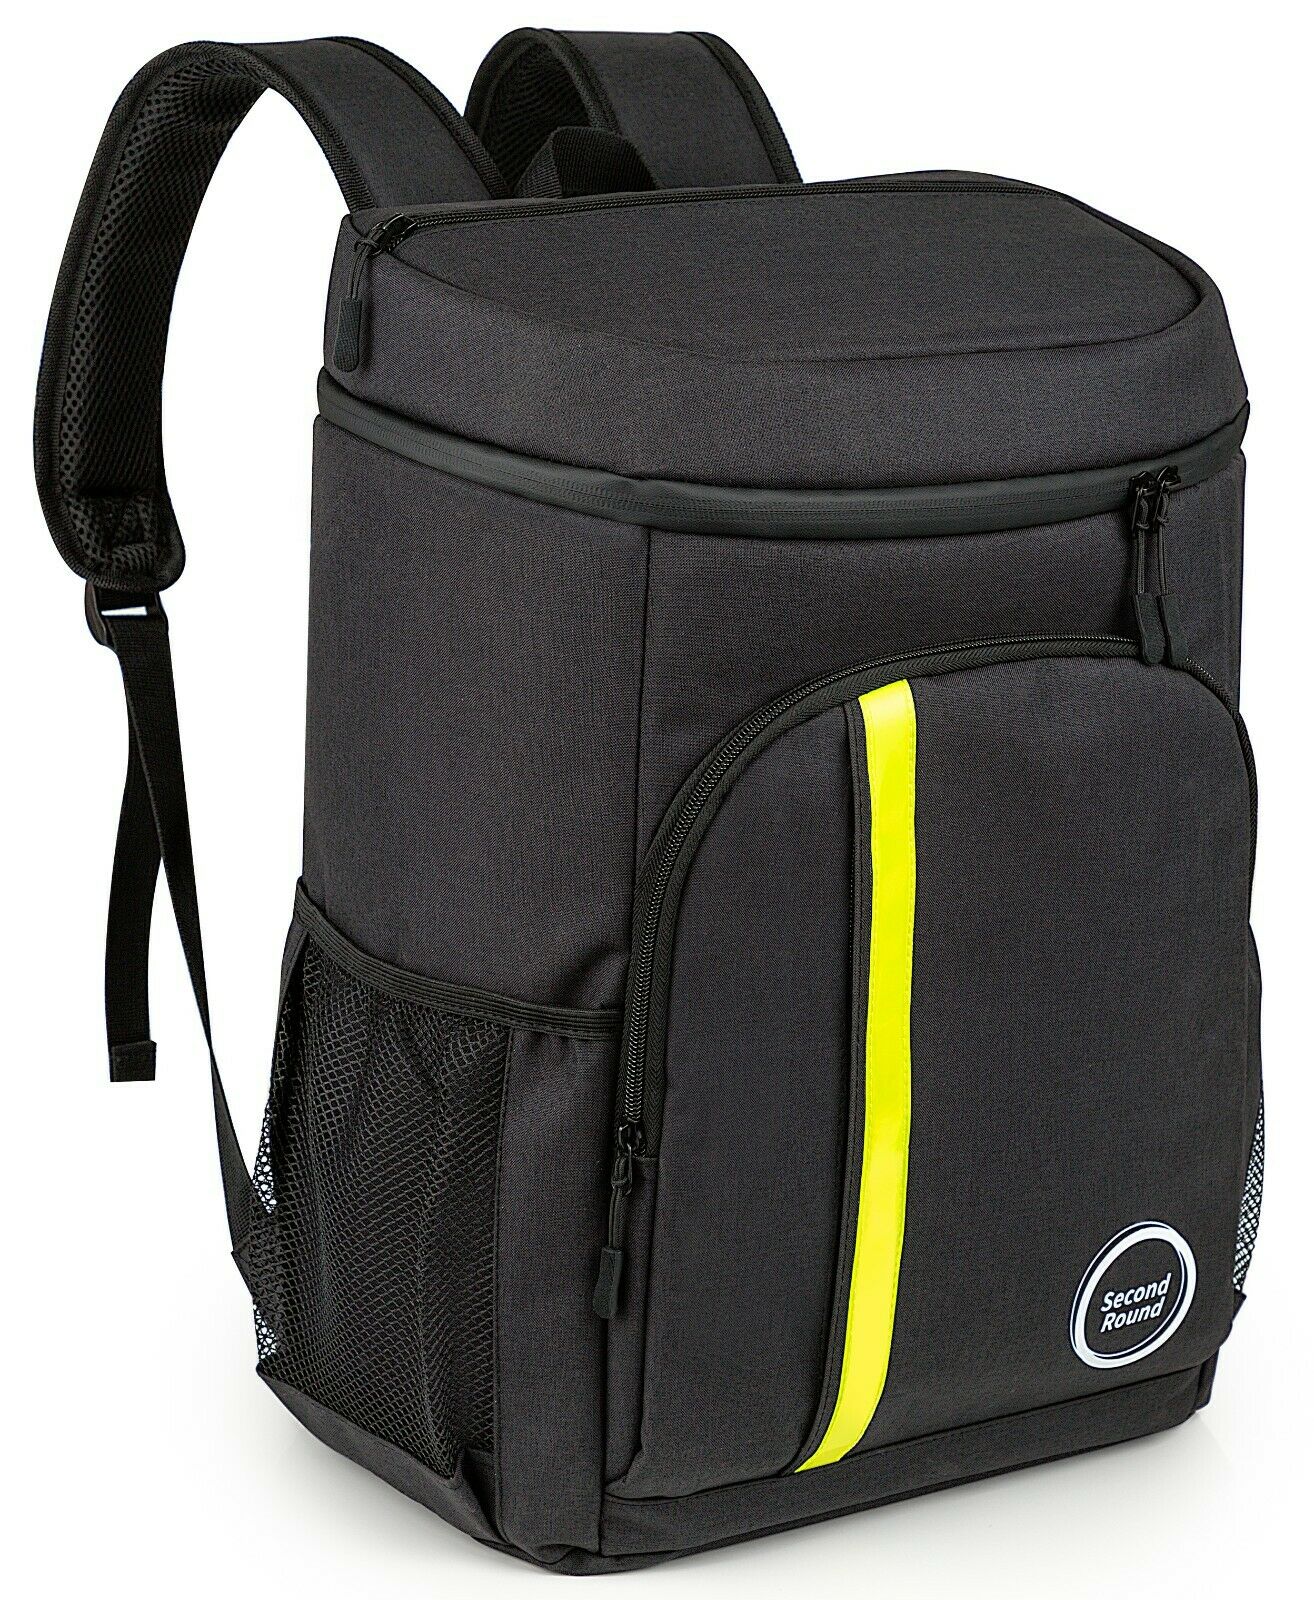 Insulated Cooler Backpack Lightweight Cooler Bag - 30 L - Leakproof Durable